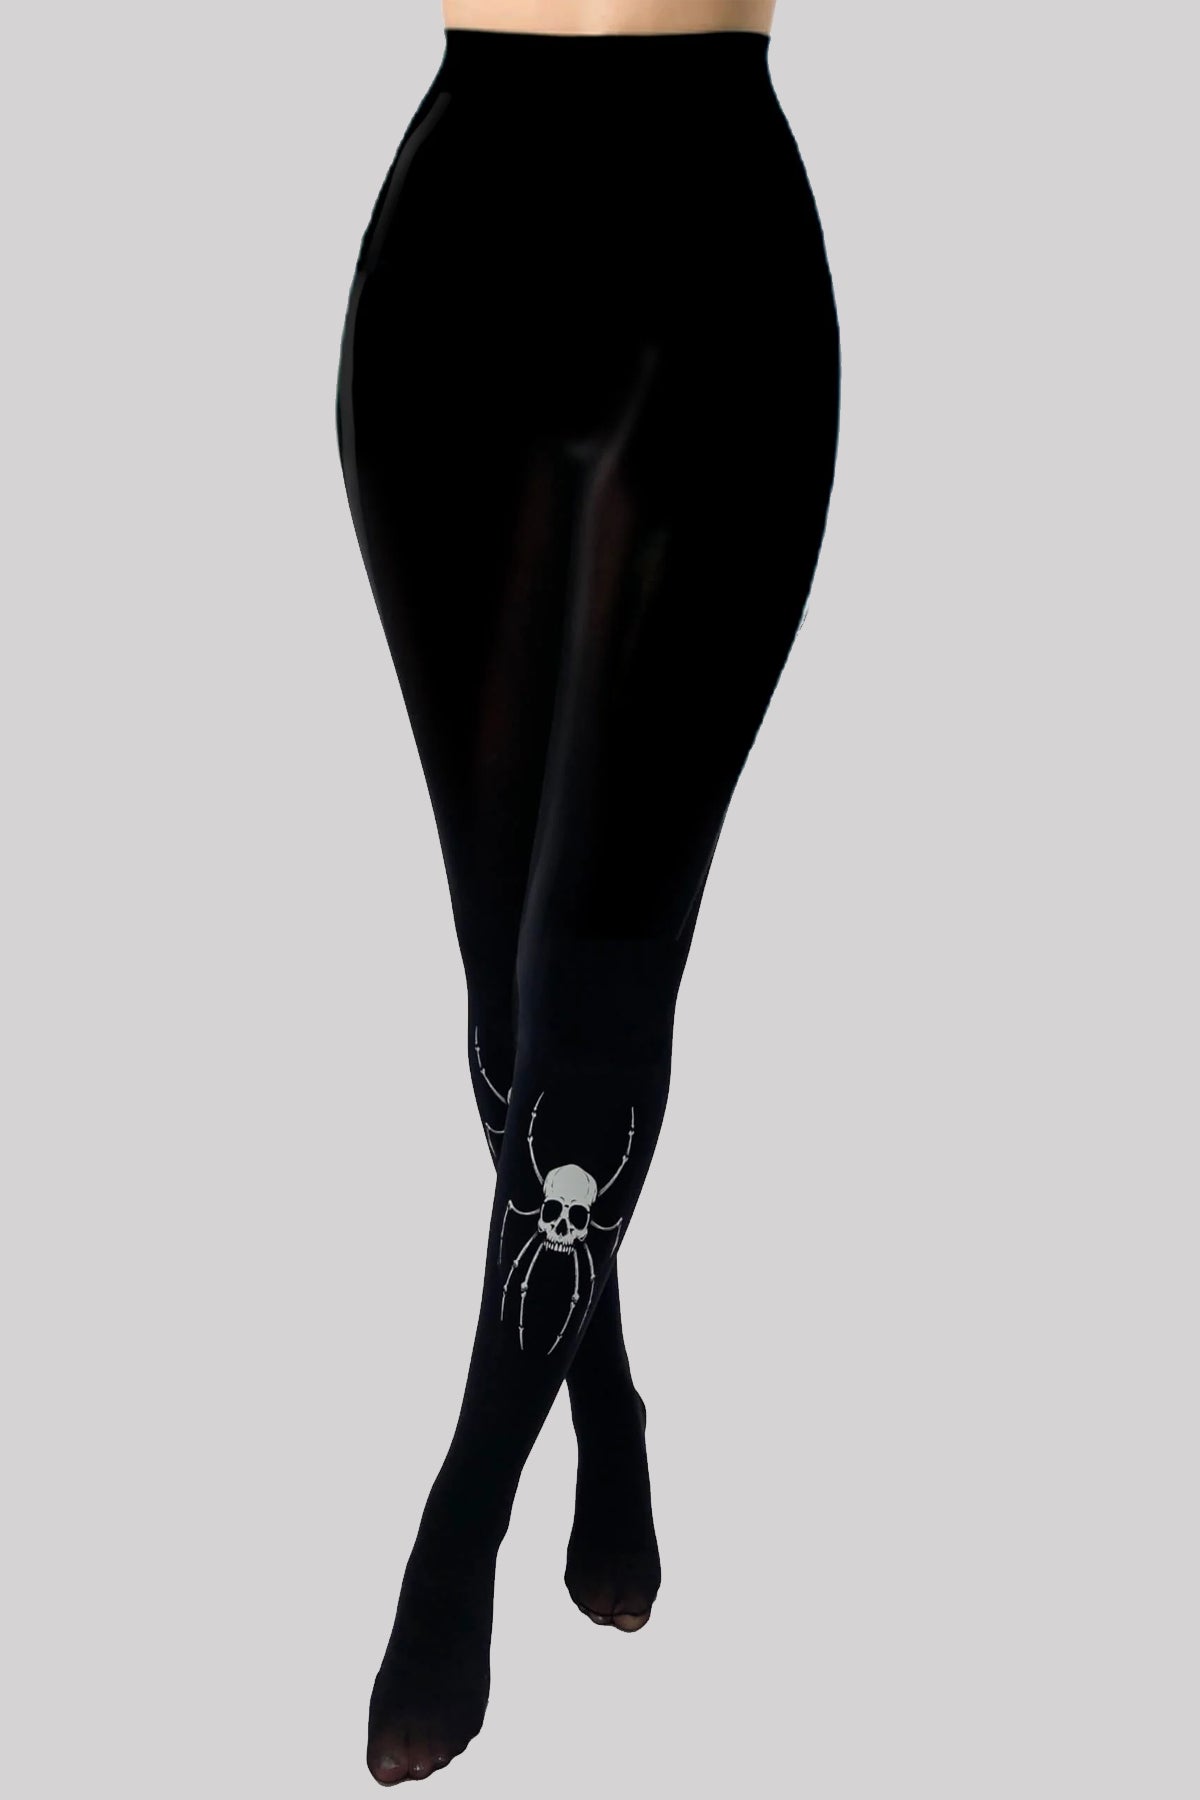 Pamela Mann Spider Skeleton Transfer Tights Women Hosiery Goth